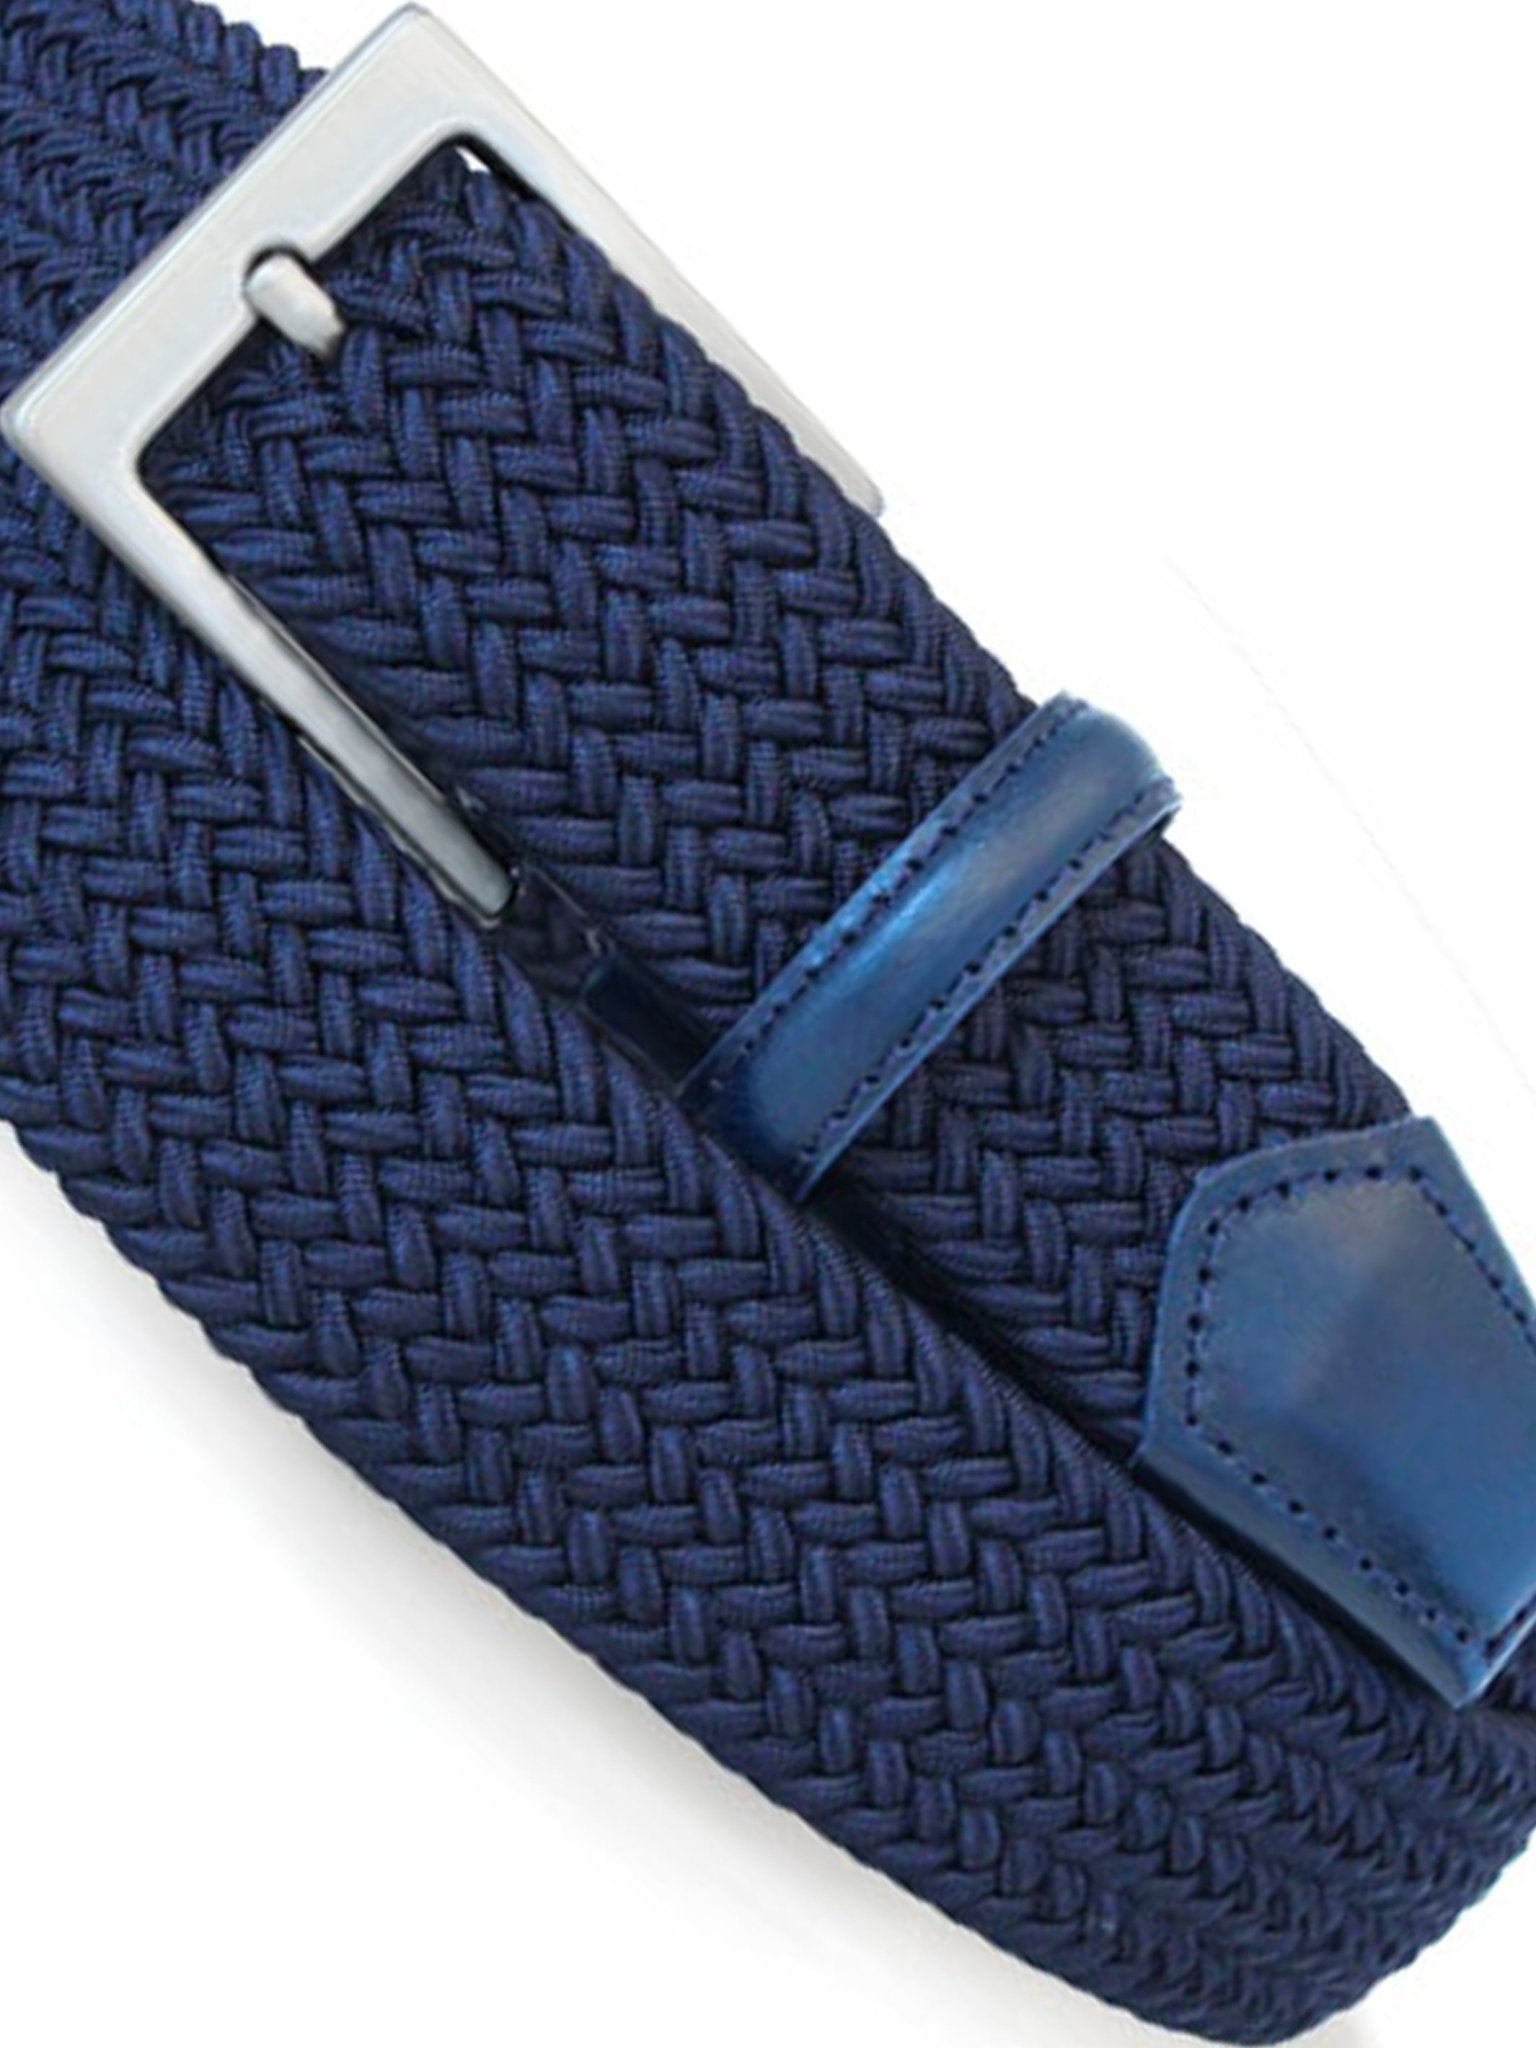 4elementsclothingRobert CharlesRobert Charles Belts - 1003 Leather & Cotton Blend Mens Belt - 32mm leather width - Made in ItalyBelts1003/navy/S